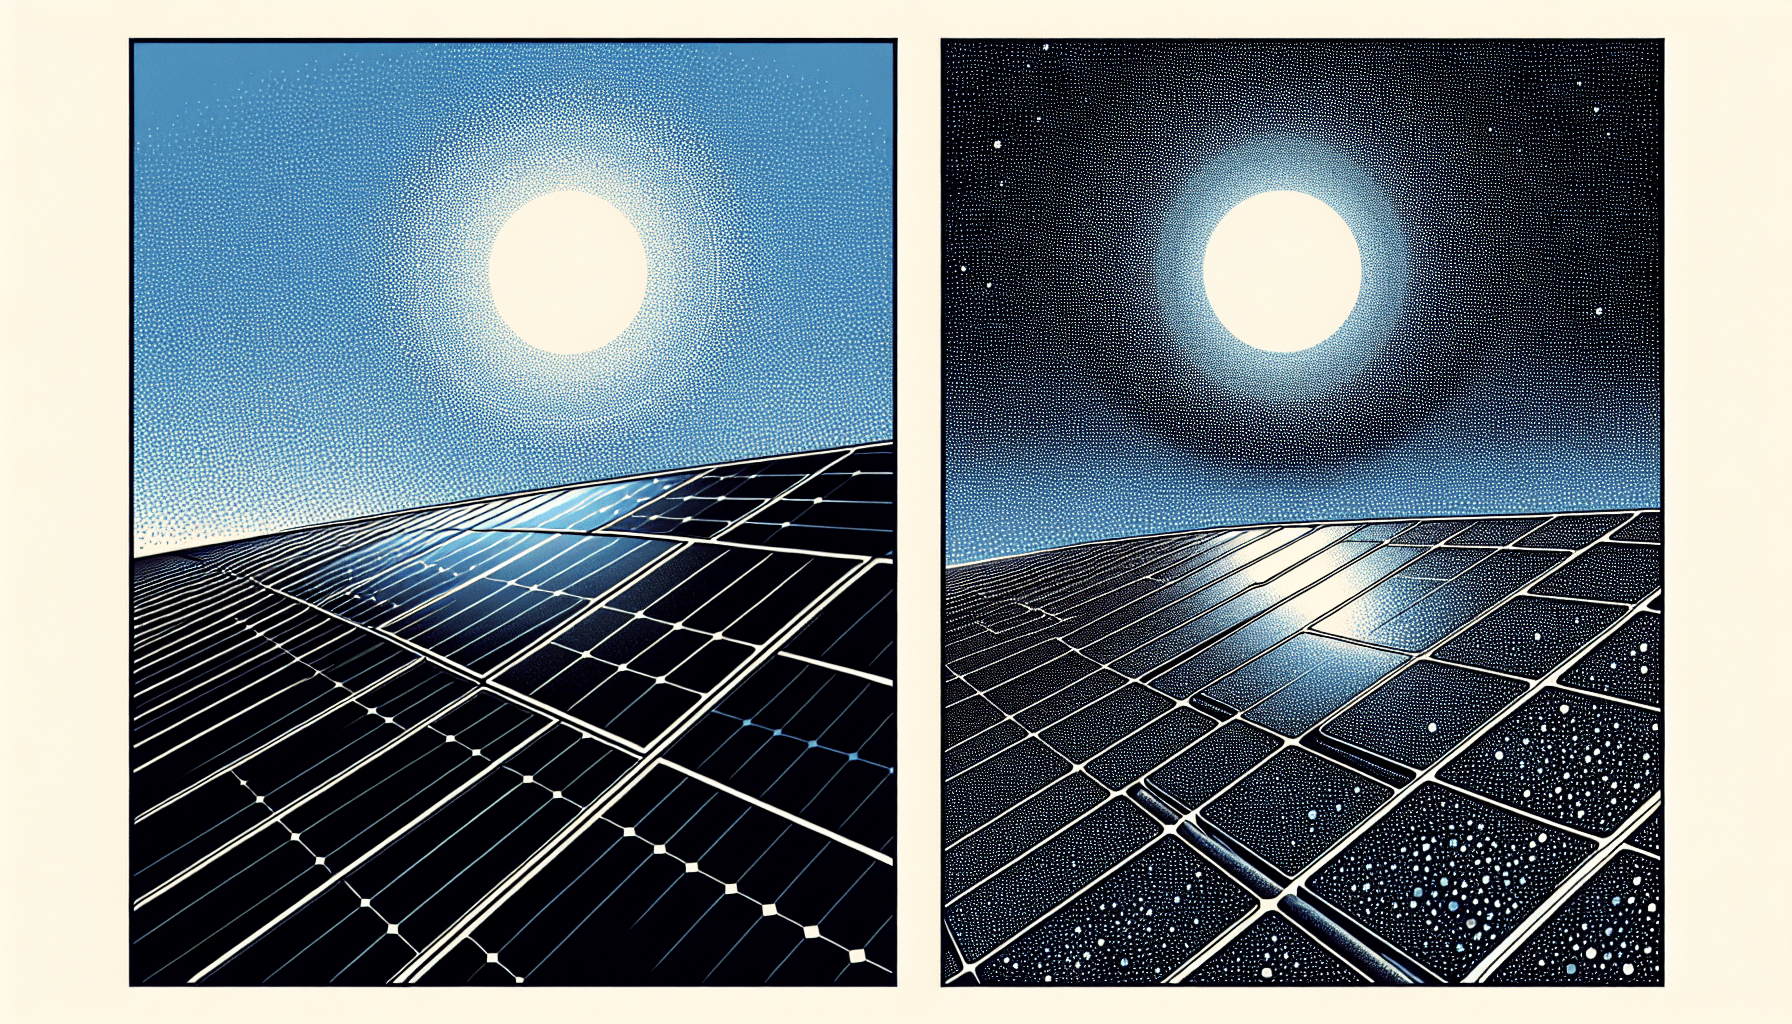 Comparison of black and blue solar panels aesthetics